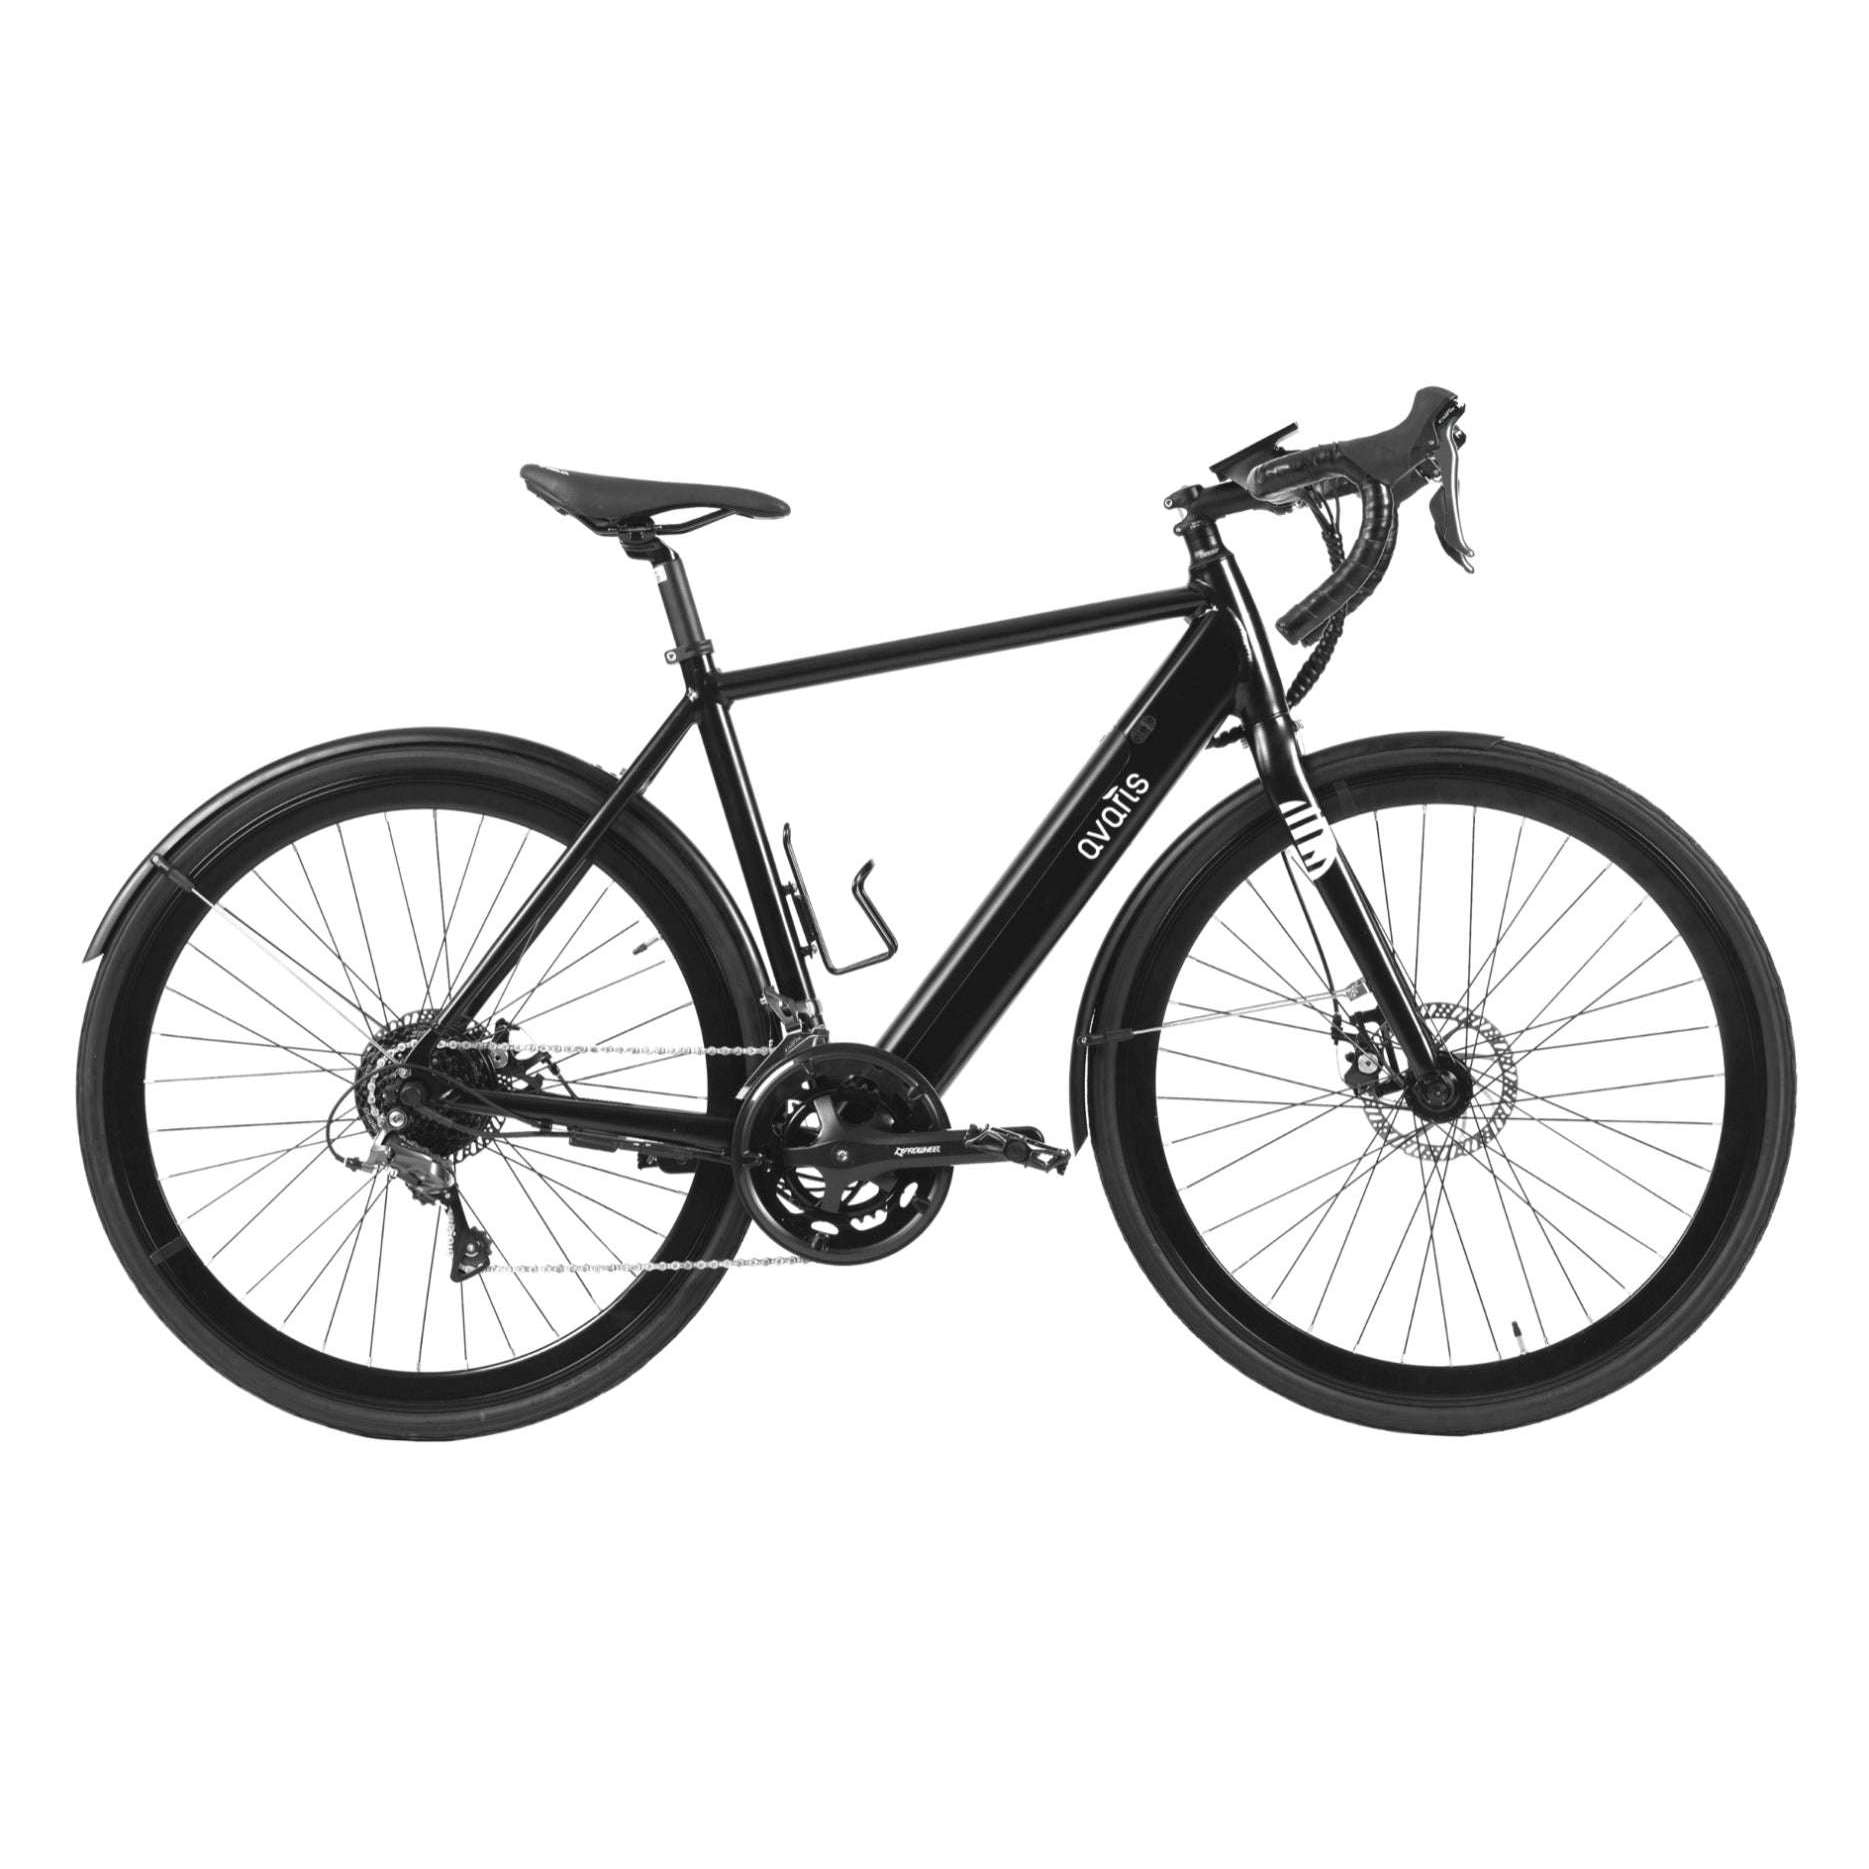 Avaris 3.6 electric bike in black with mudguard